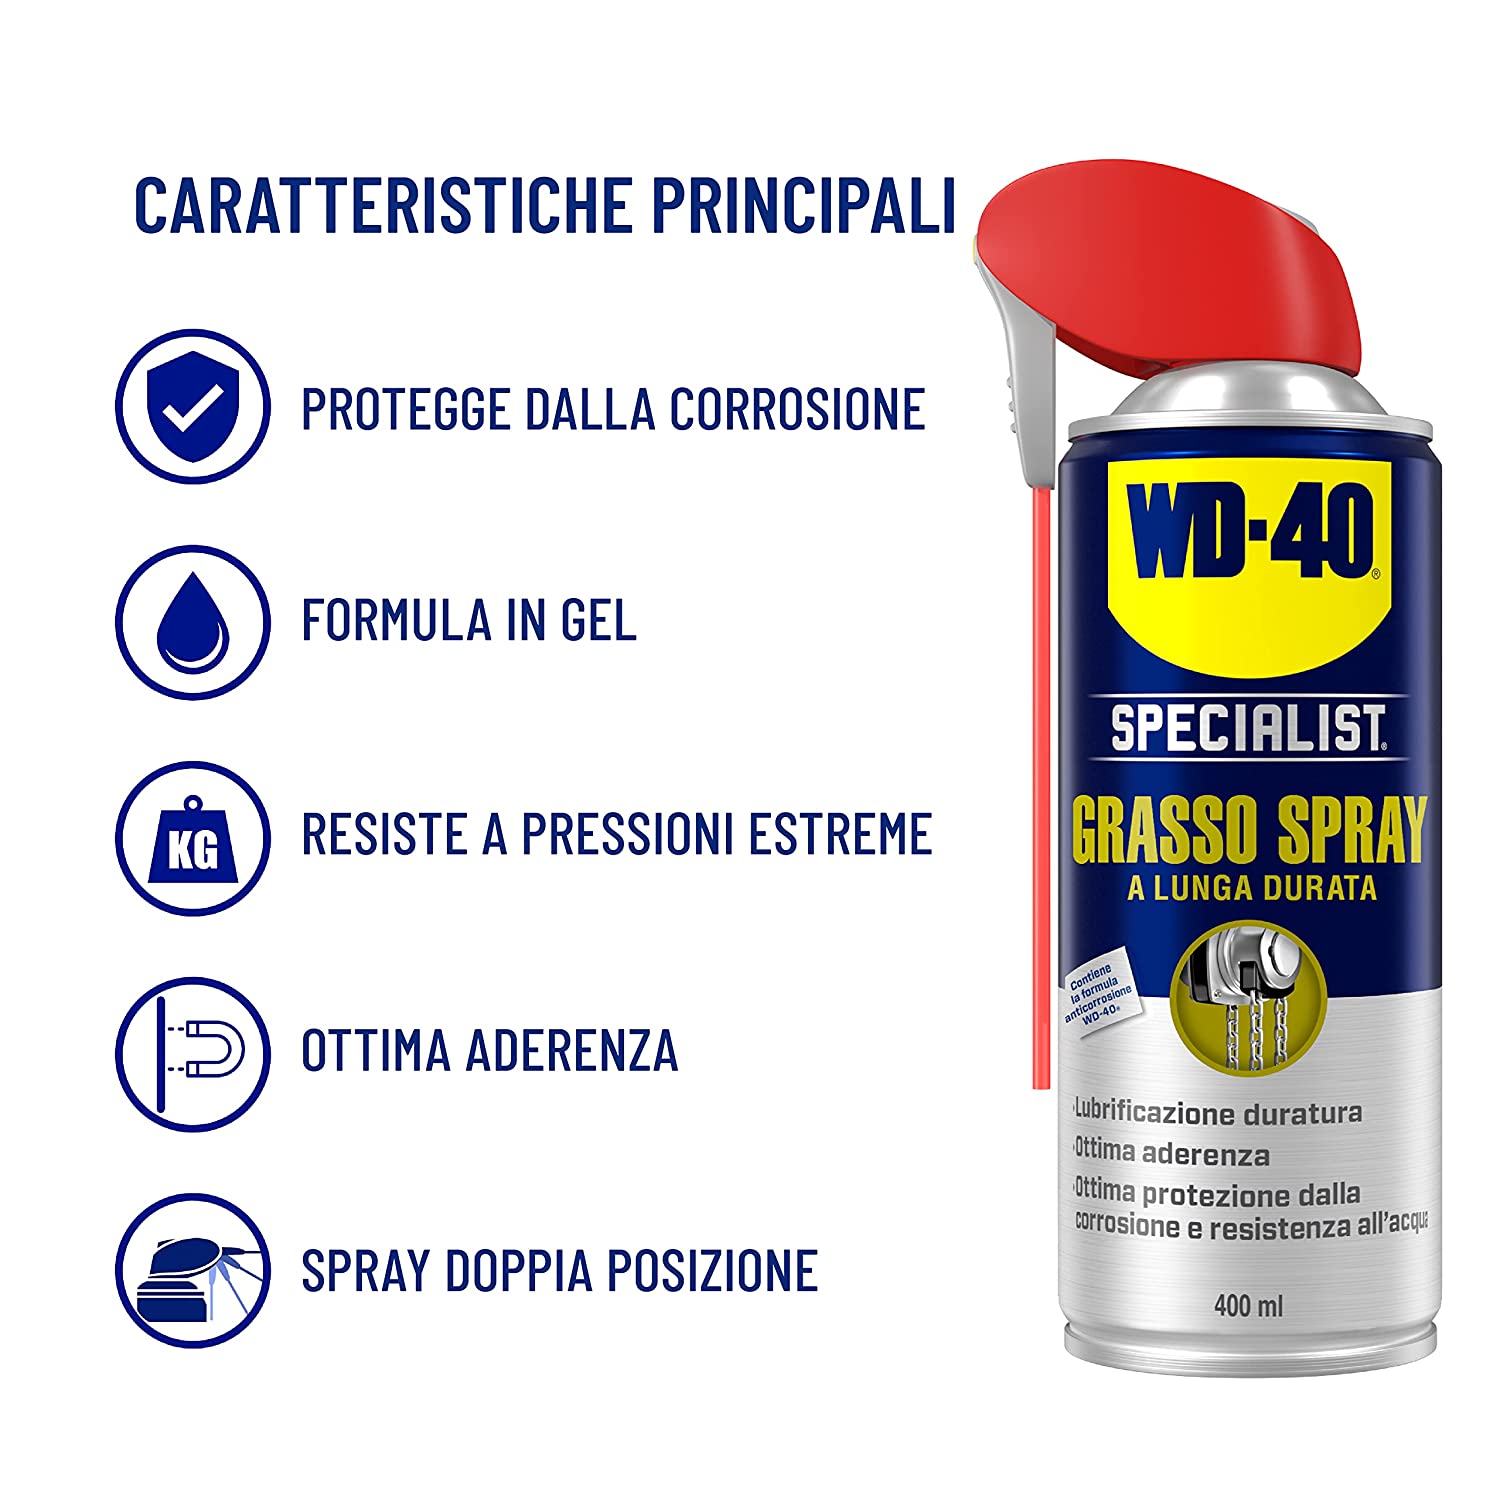 WD 40 Grasso spray Specialist Lunga Durata ml400- ToolShop Italia